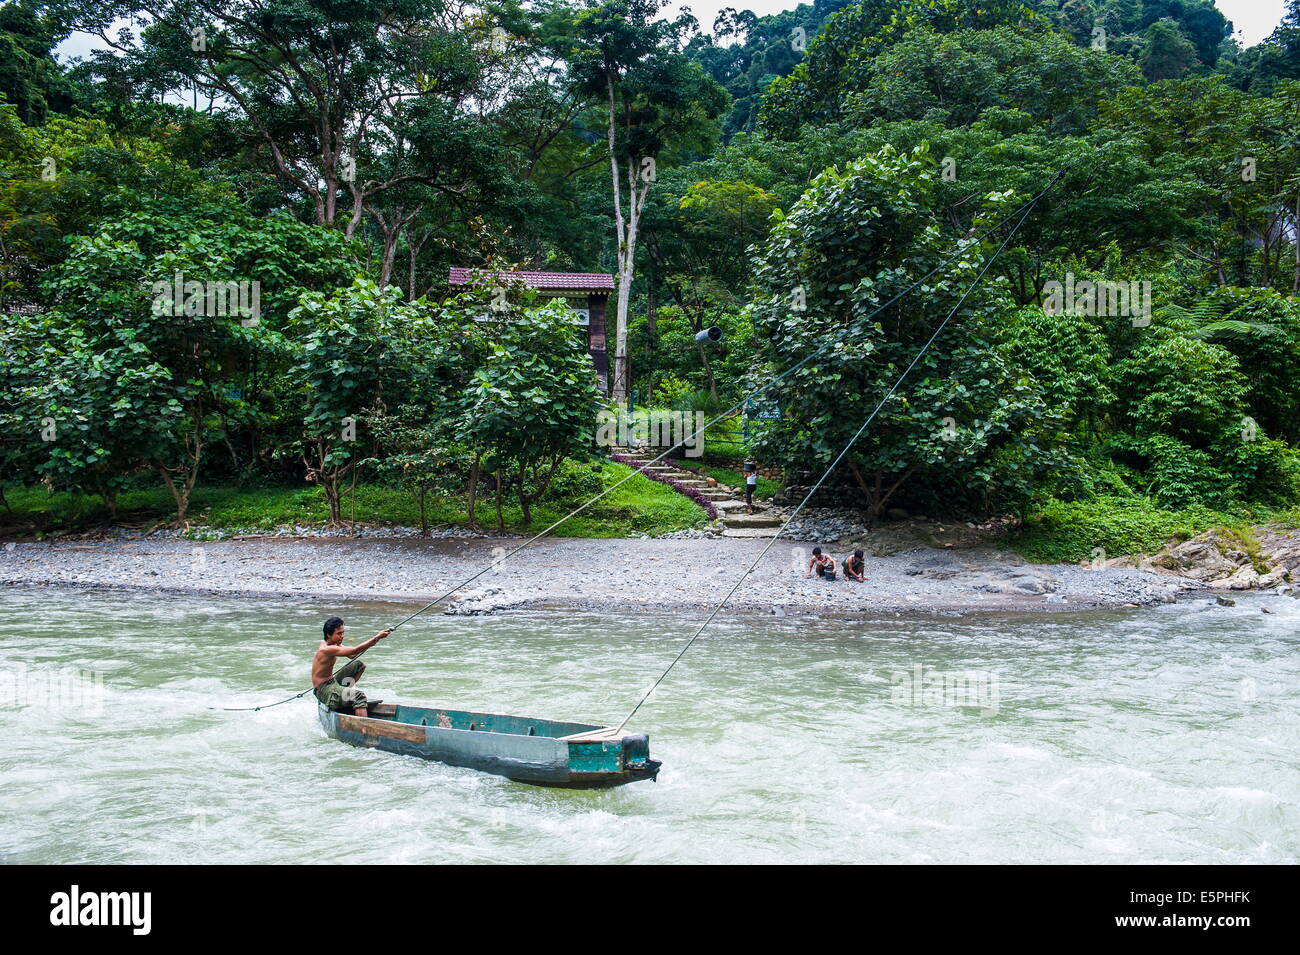 Man on the Bohorok River, transporting tourist to the Bukit Lawang Orang Utan Rehabilitation station, Sumatra, Indonesia Stock Photo